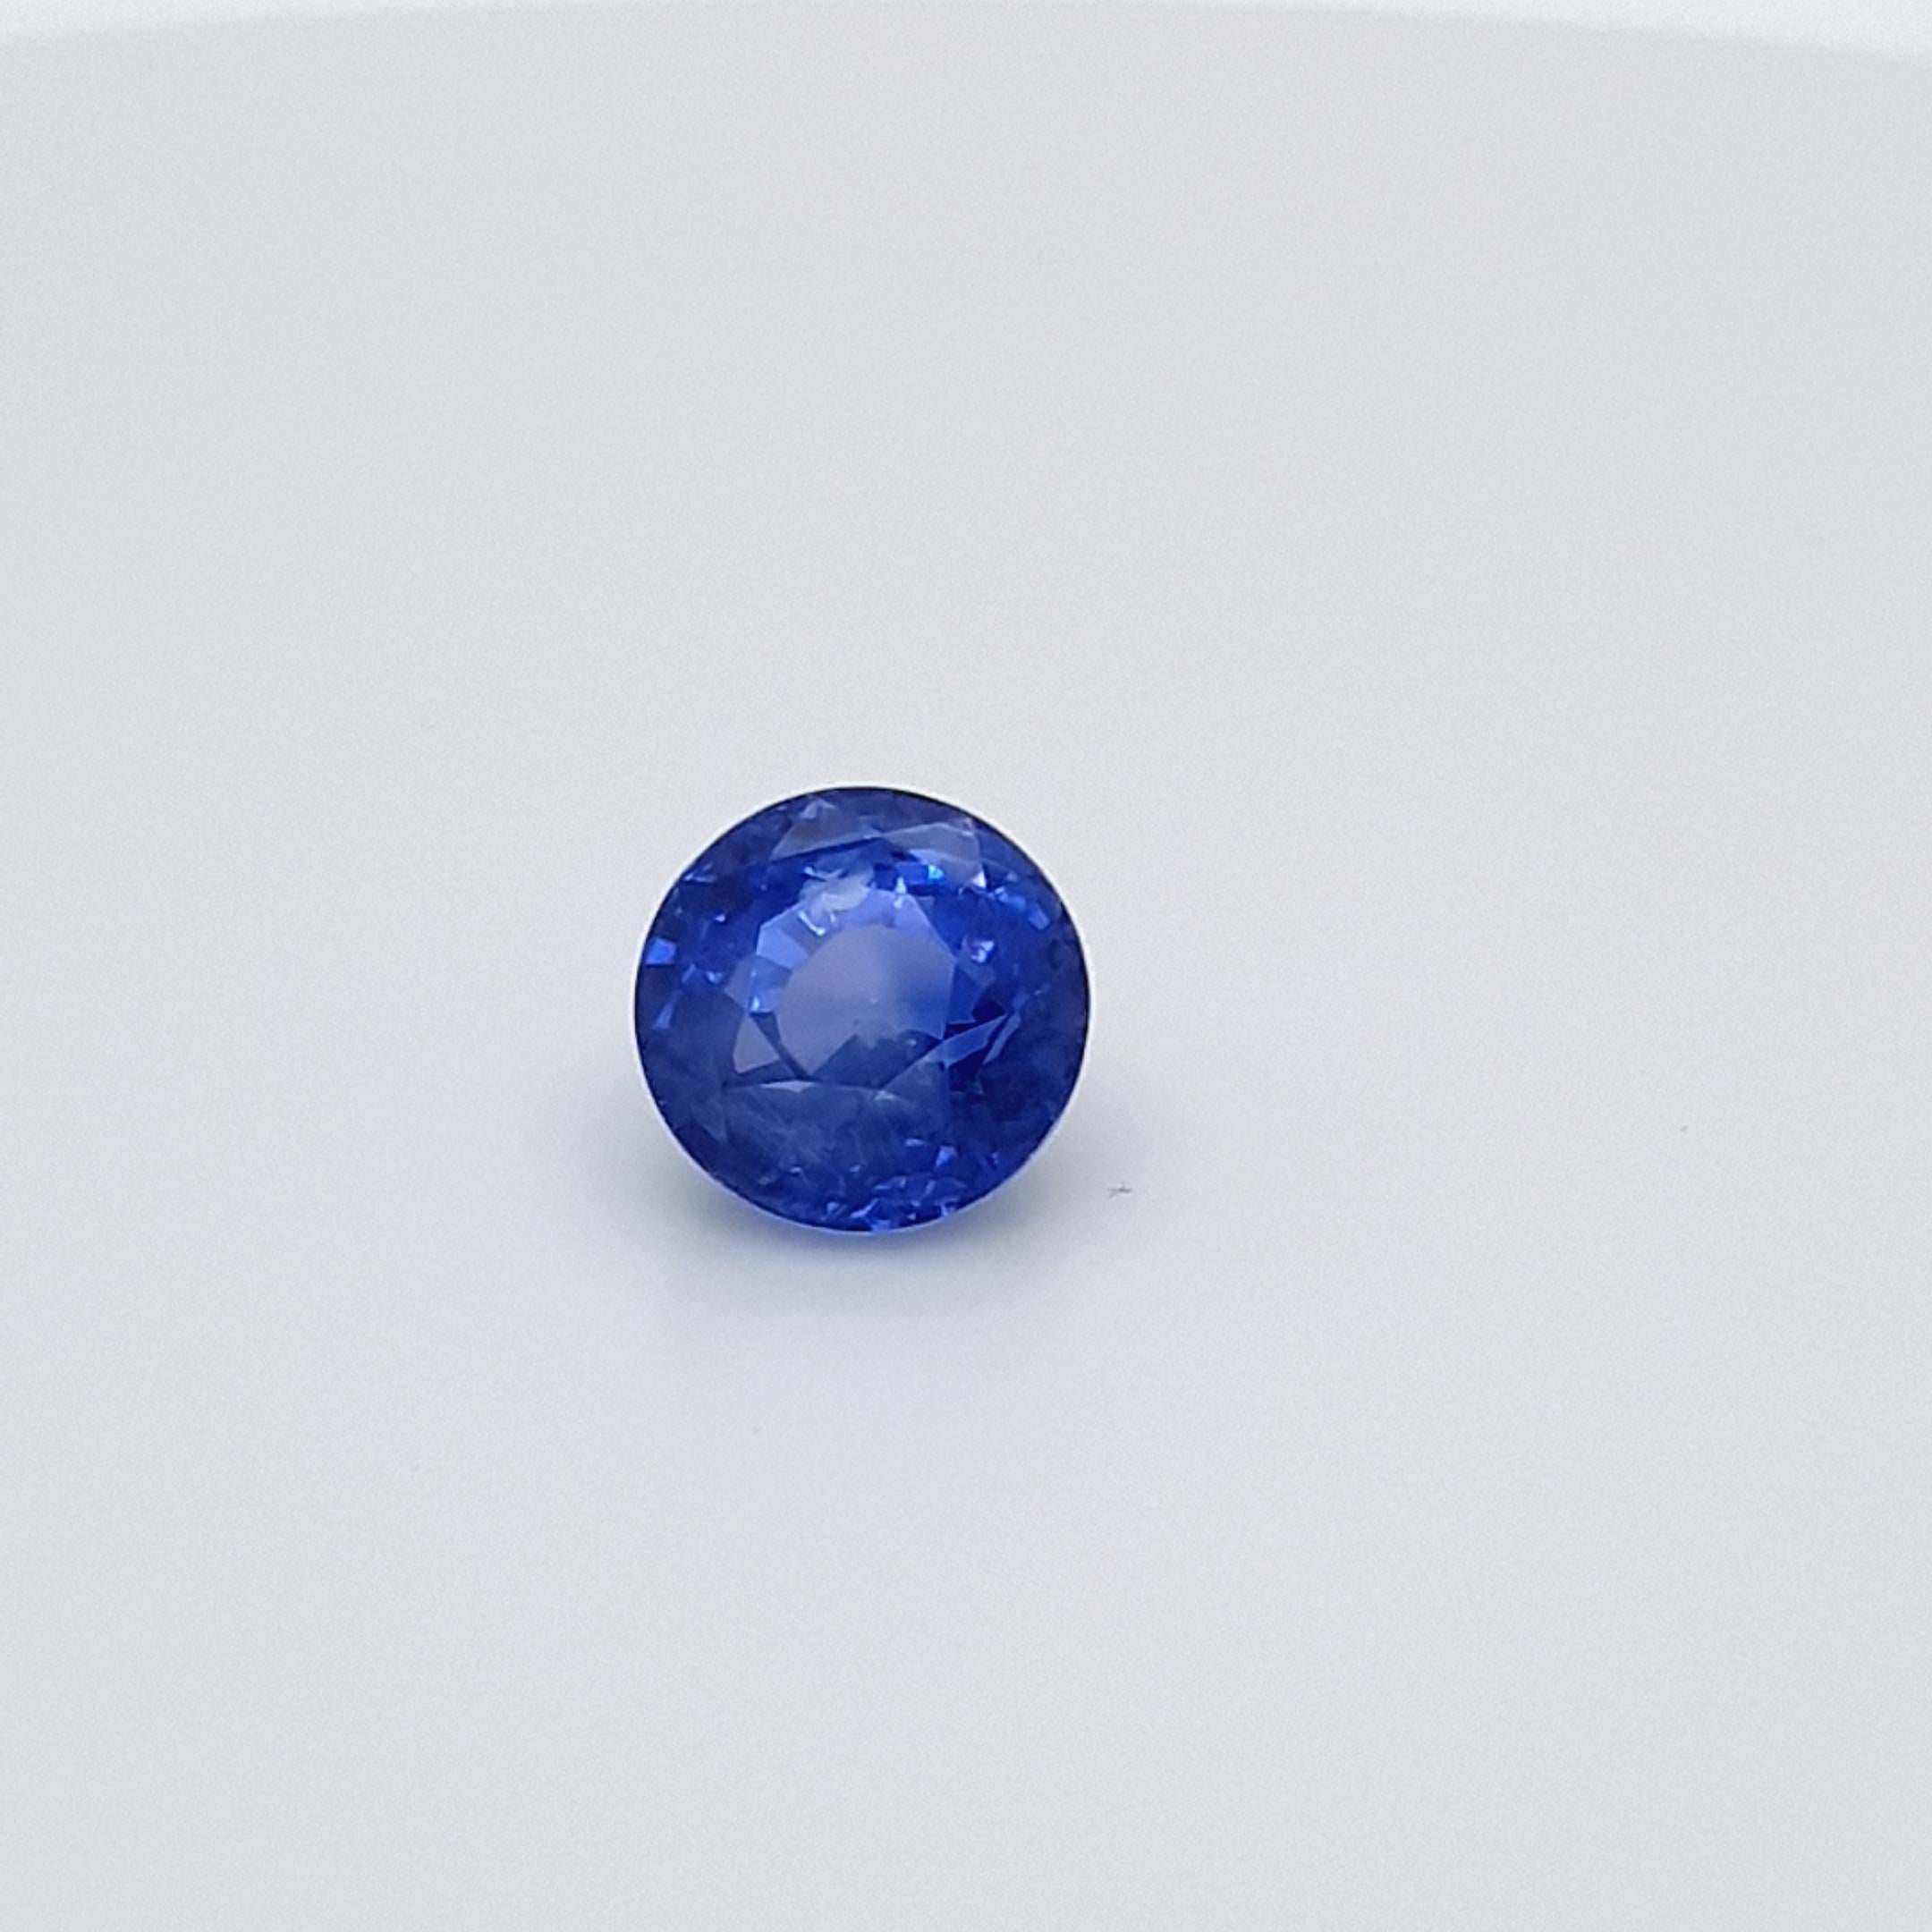 Cushion Cut Blue Sapphire, round,  Faceted Gem, 5, 91 ct., loose Gemstone, not heate, natural